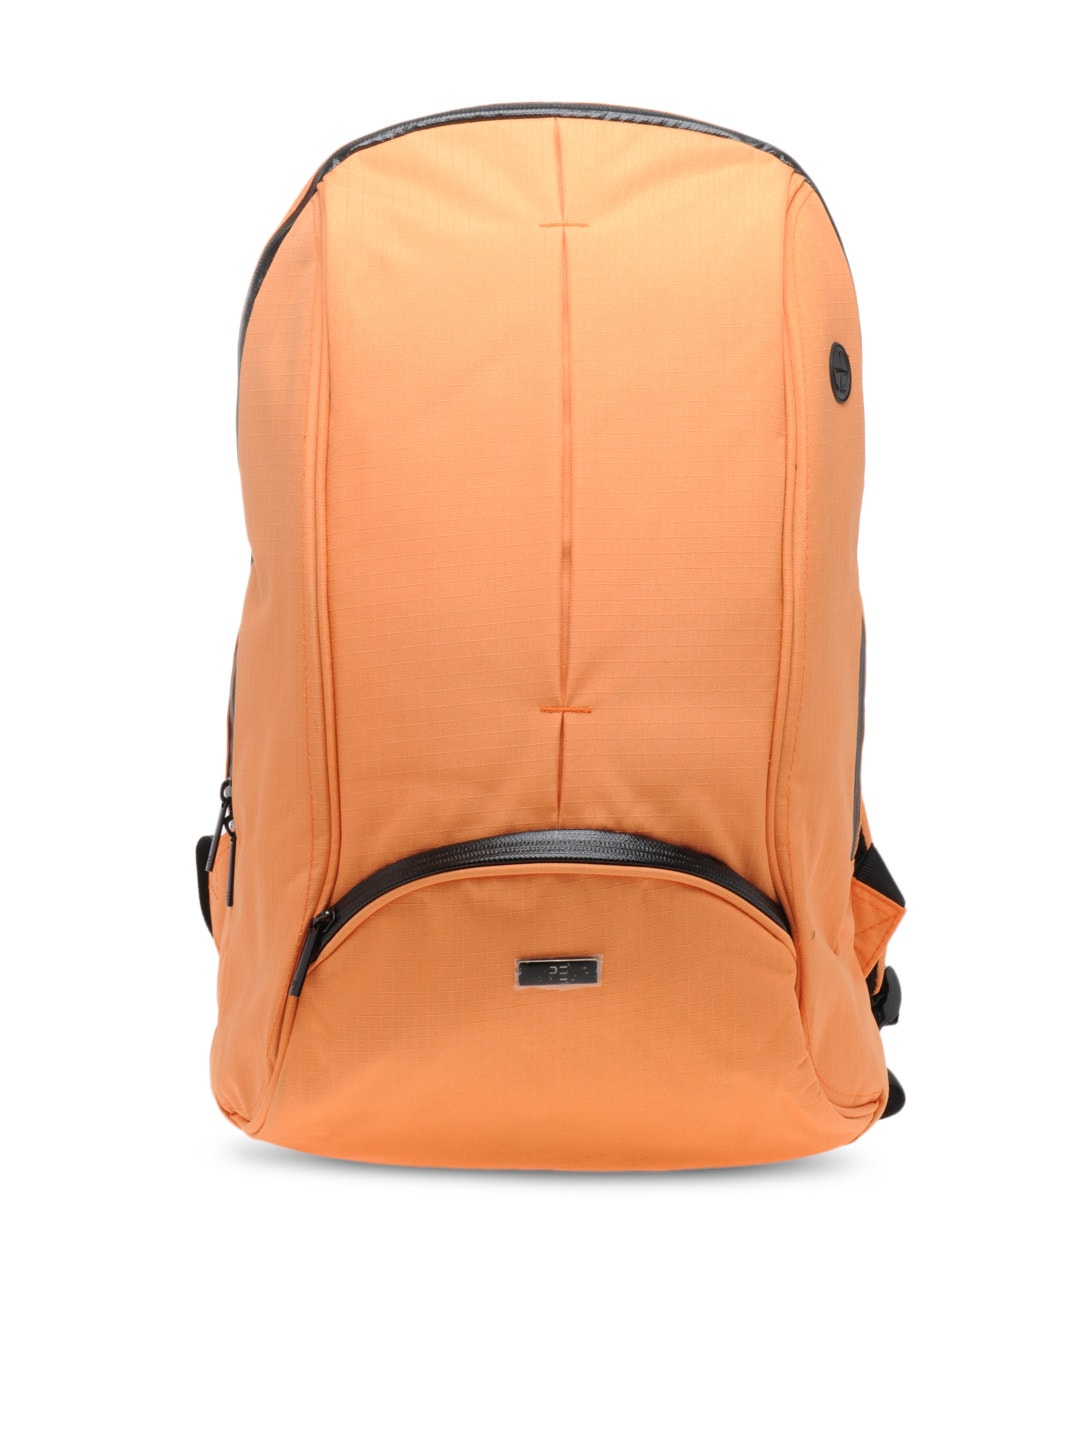 Peter England Unisex Orange Backpack